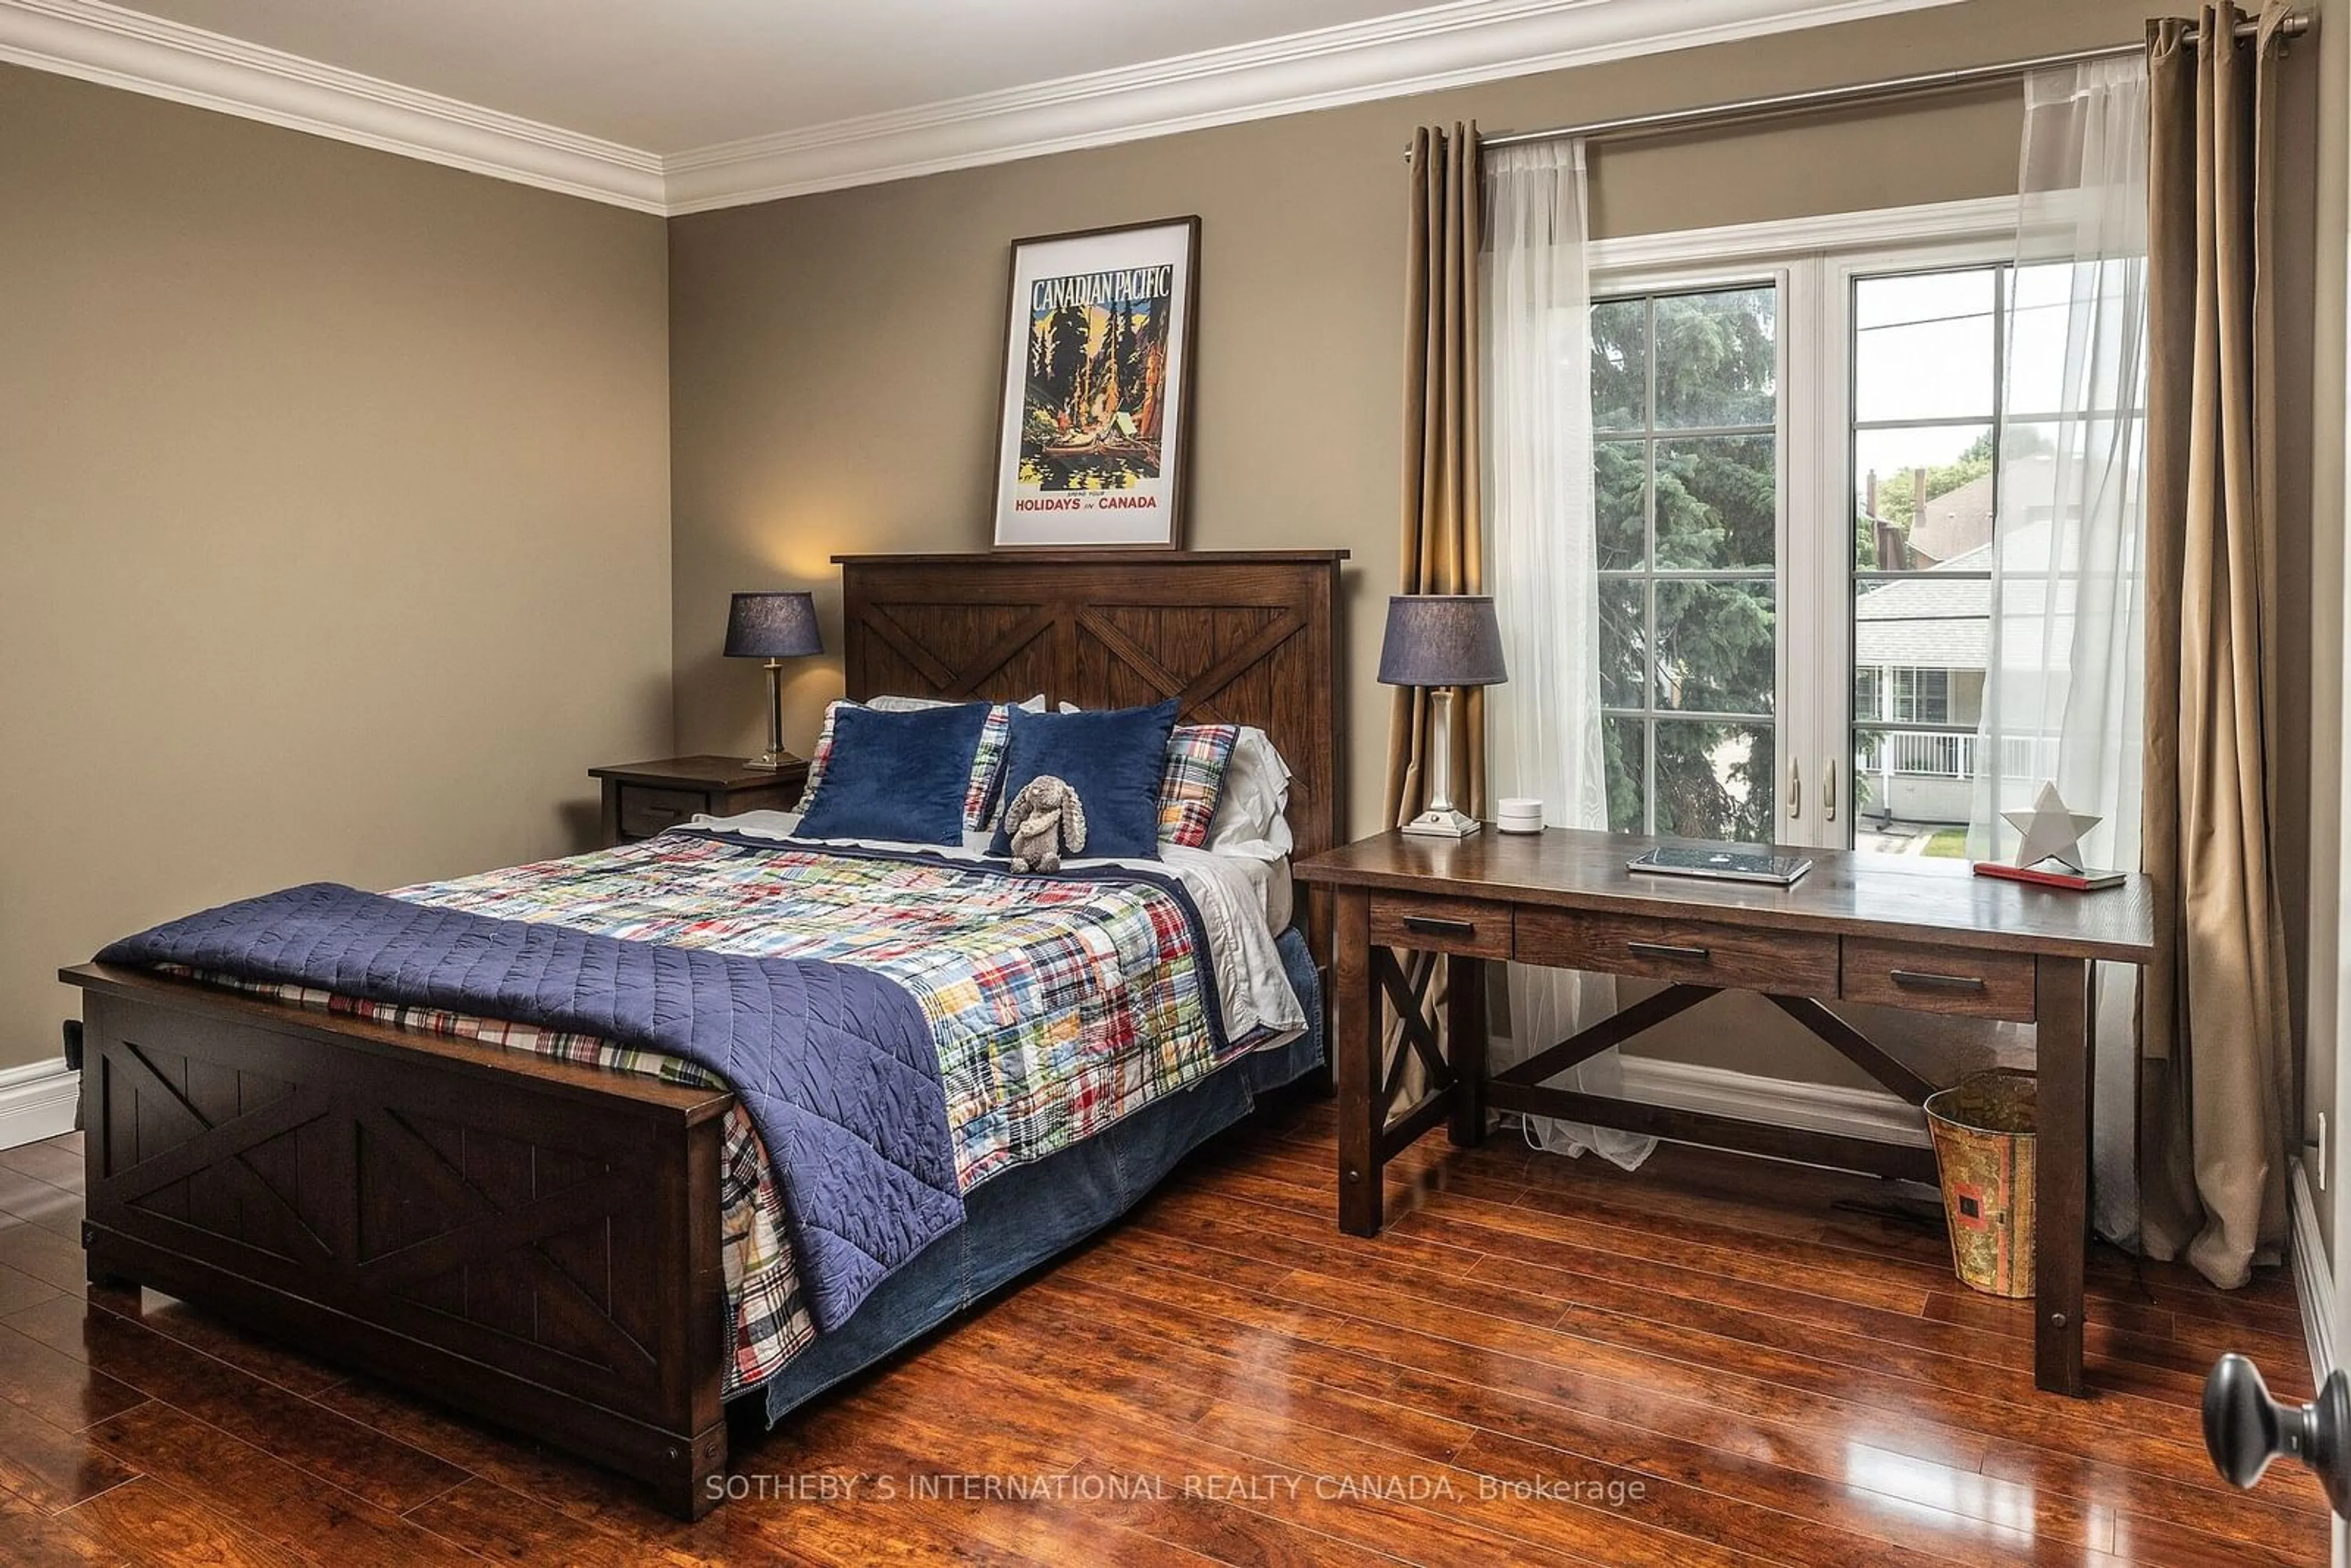 Bedroom for 230 Reiner Rd, Toronto Ontario M3H 2M3